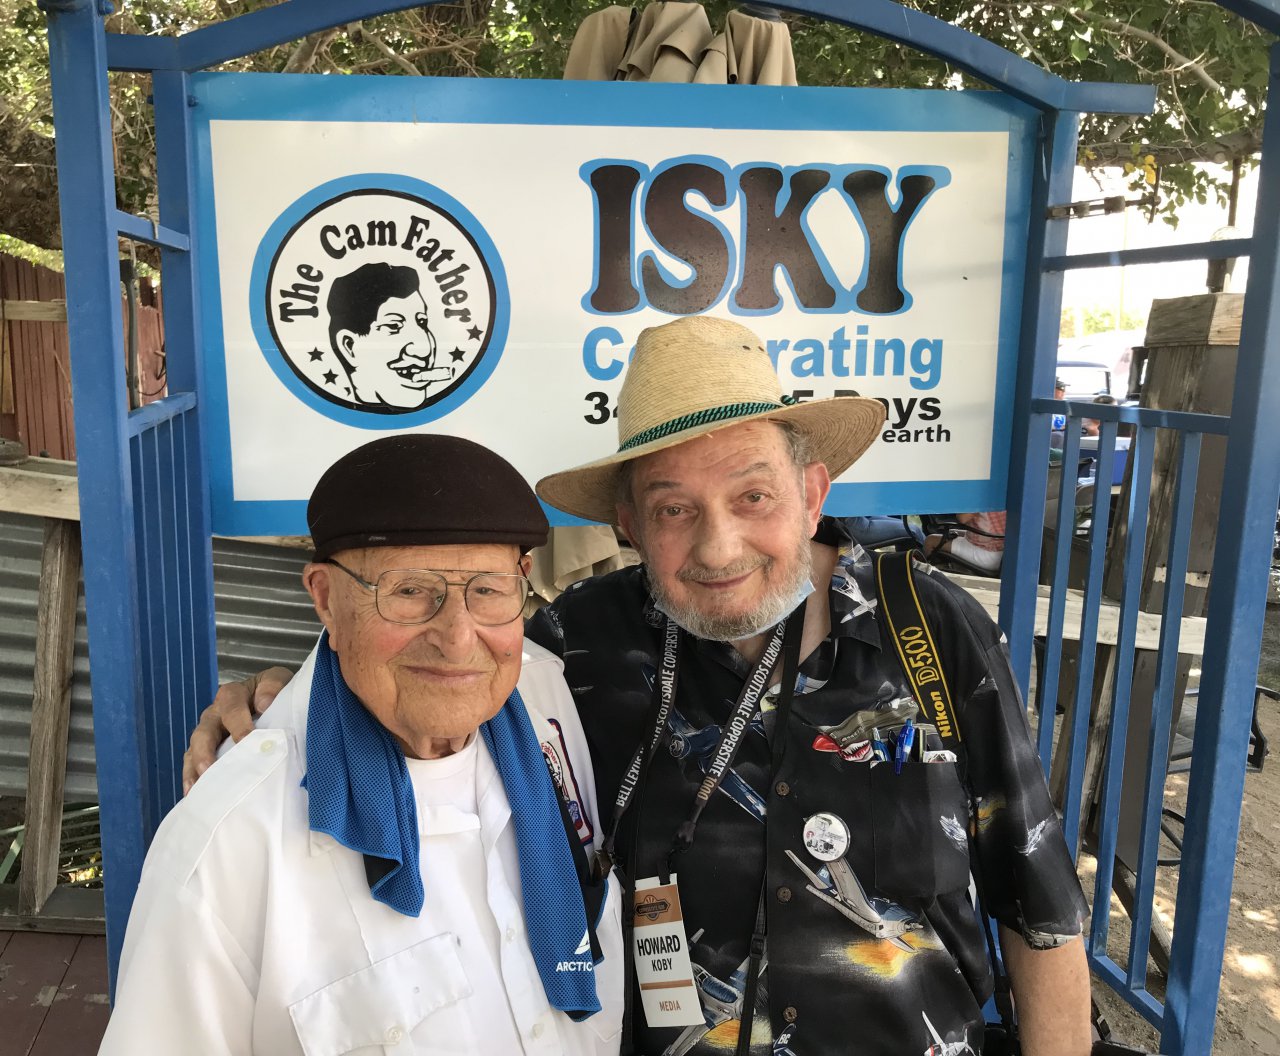 Isky, Isky still frisky at age 100, ClassicCars.com Journal